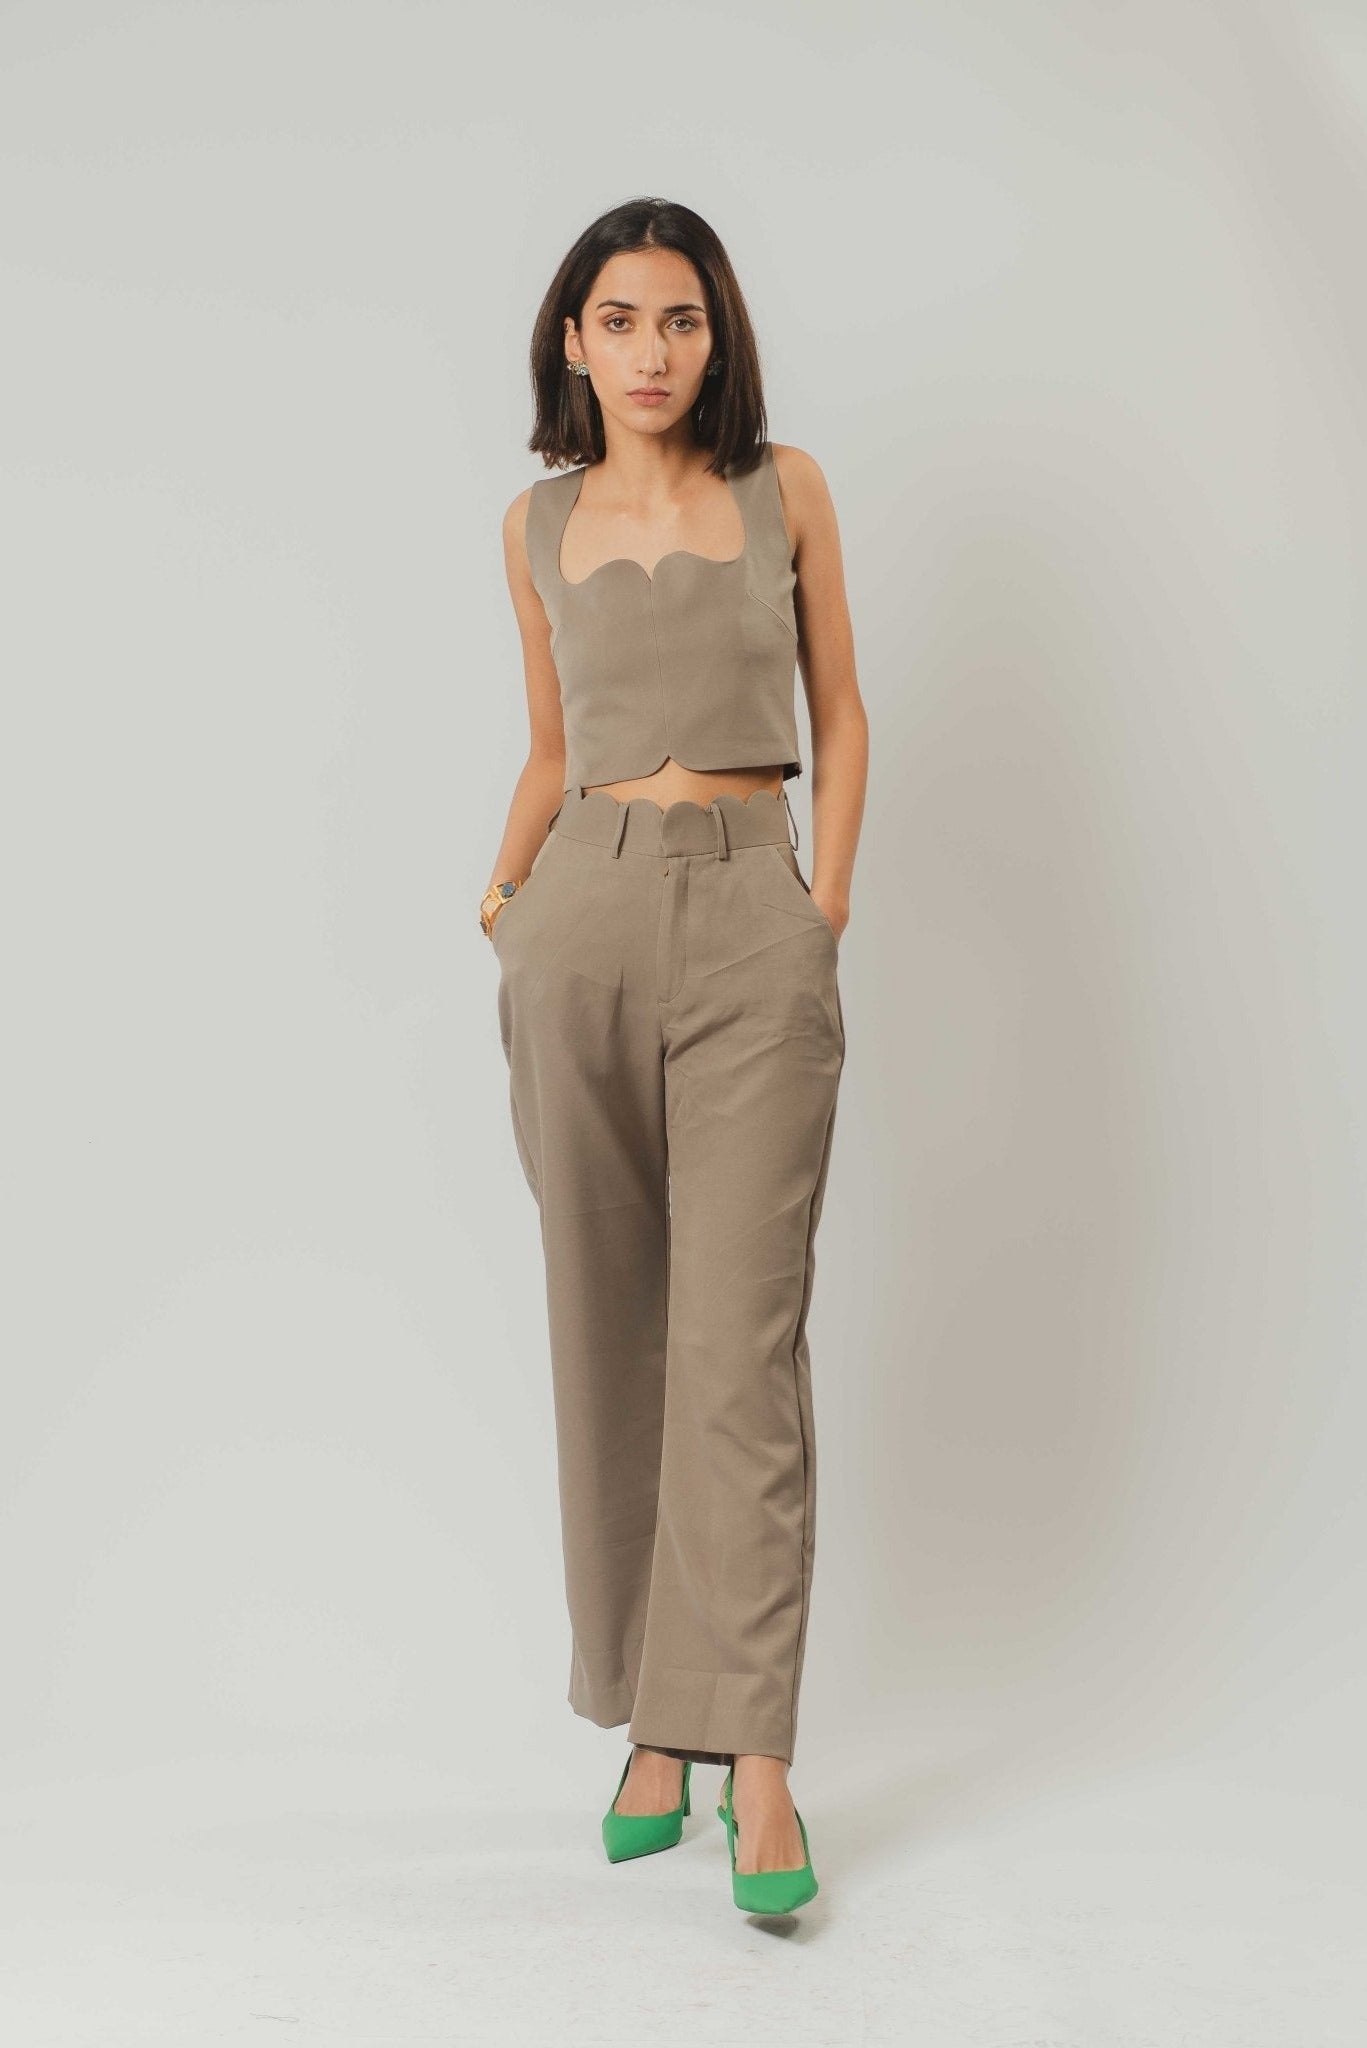 Plus Size Keily Lace Top And Pant Set - Ivory – Curvy Sense